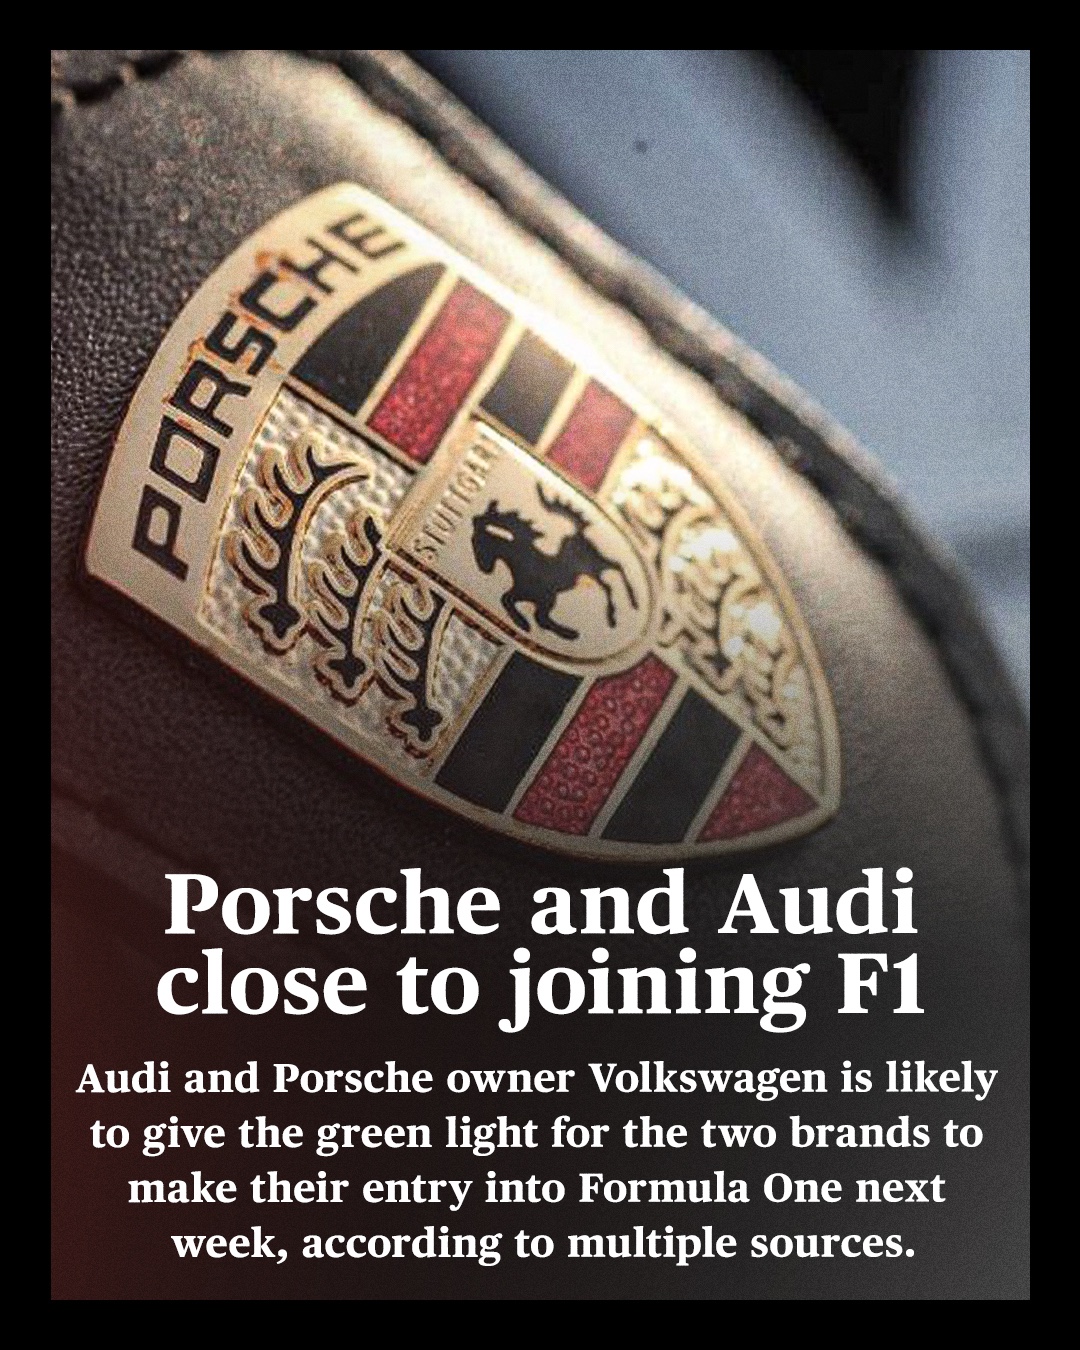 Audi and Porsche in F1?